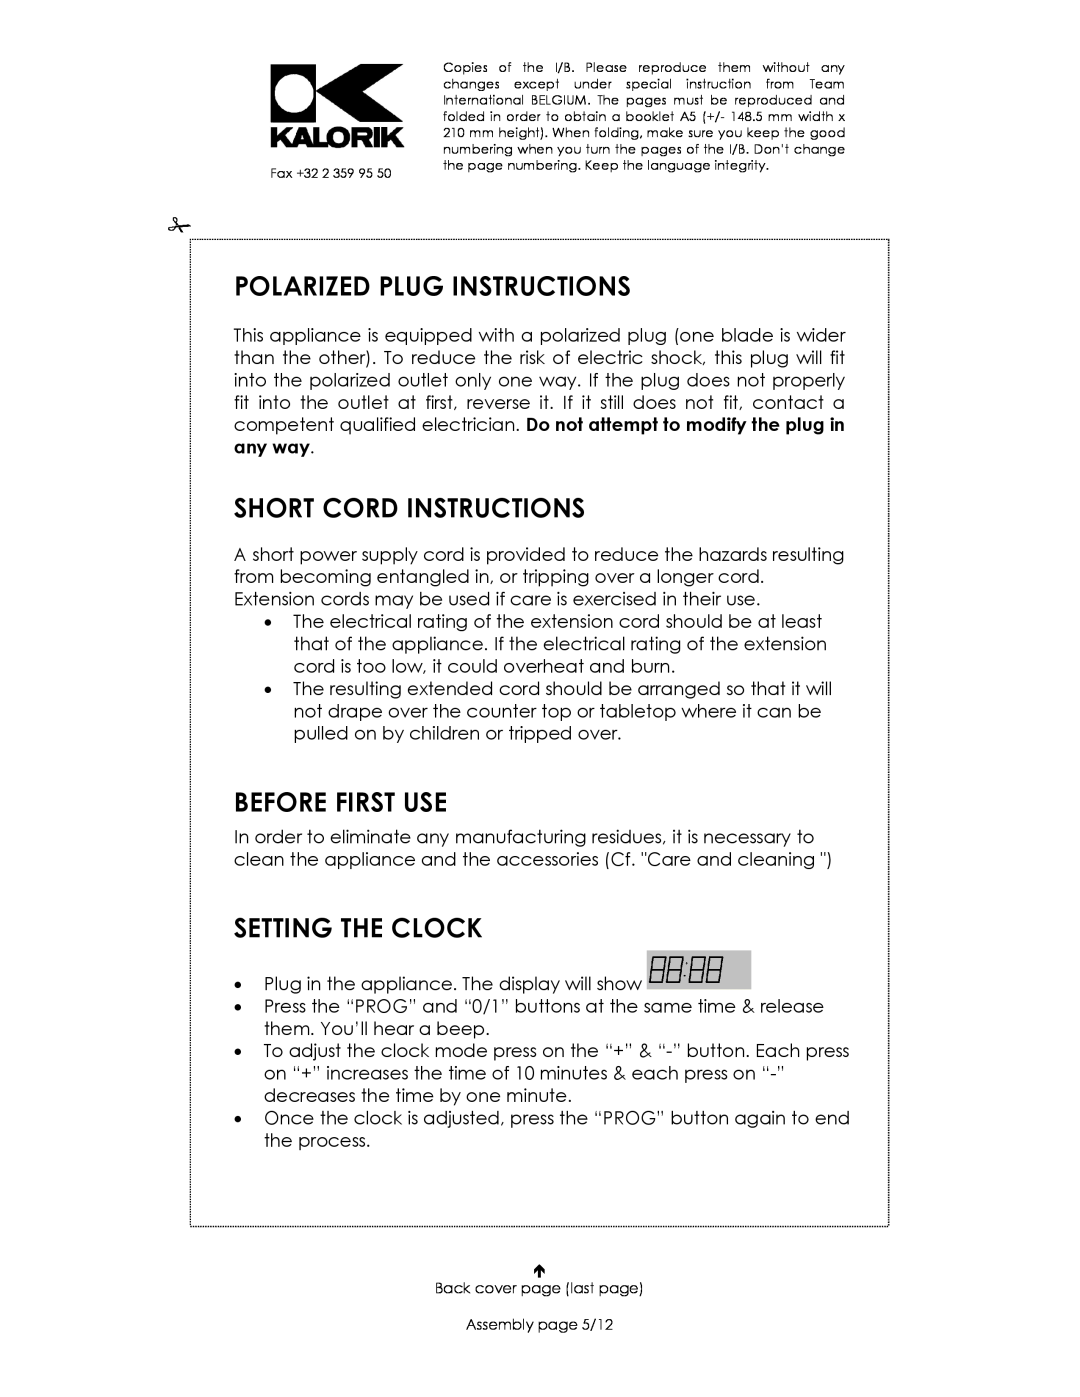 Kalorik USK DG 16271 manual Polarized Plug Instructions, Short Cord Instructions, Before First Use, Setting The Clock 